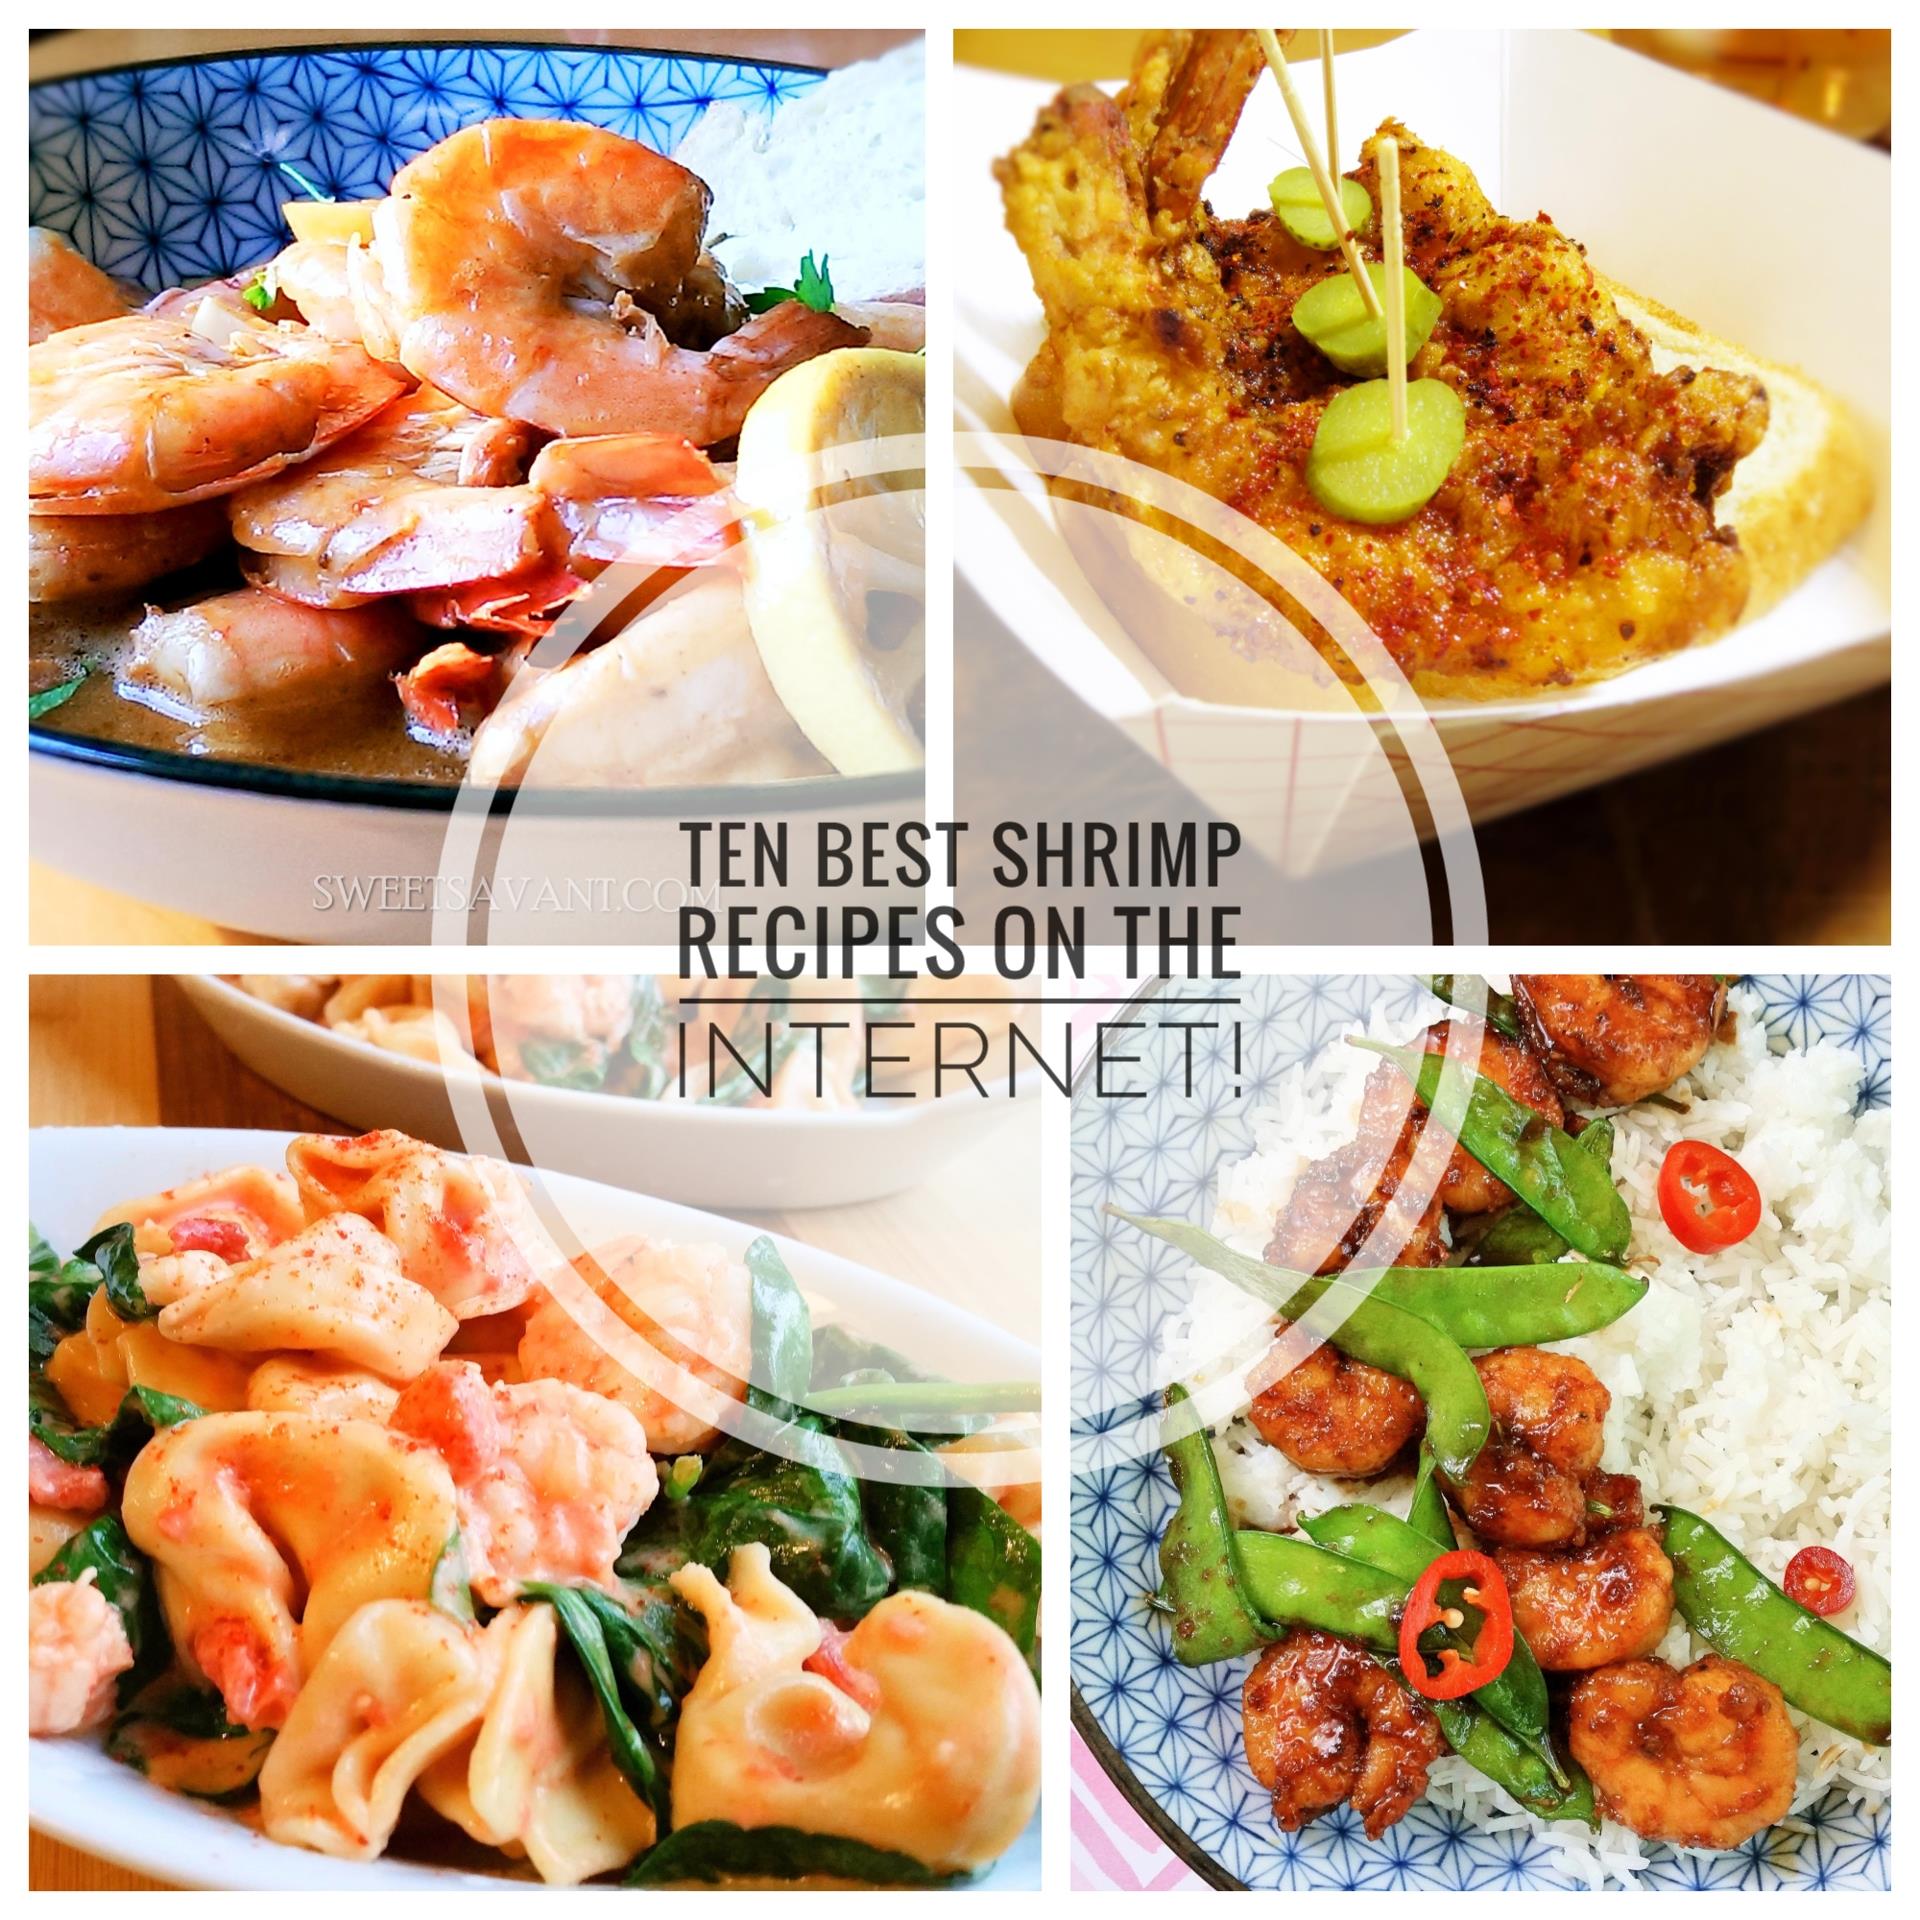 The 10 Best Shrimp Recipes on the Internet - Sweet Savant